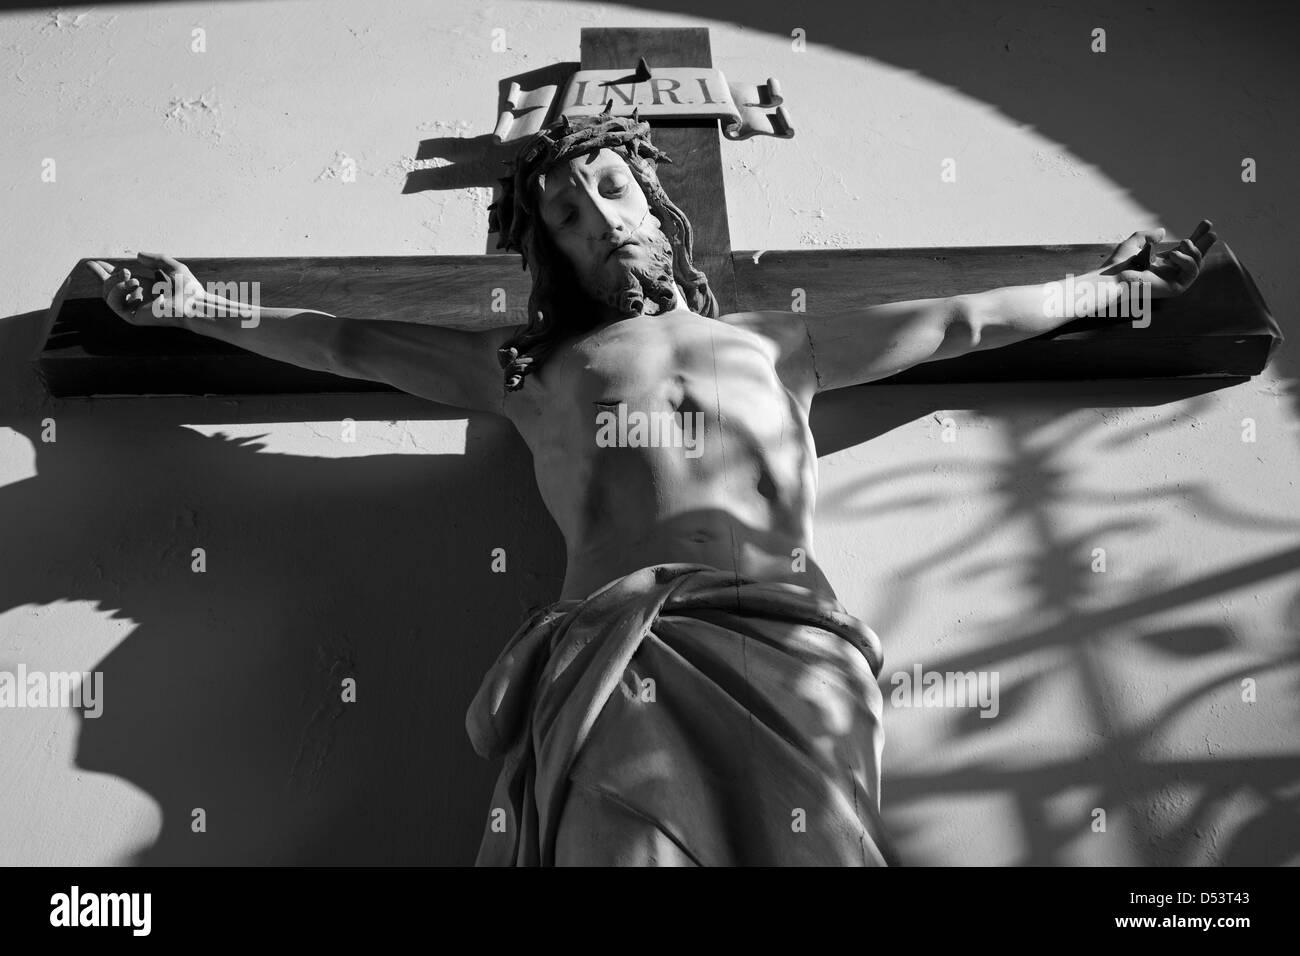 Jesus Christ on the cross from Vienna church Stock Photo